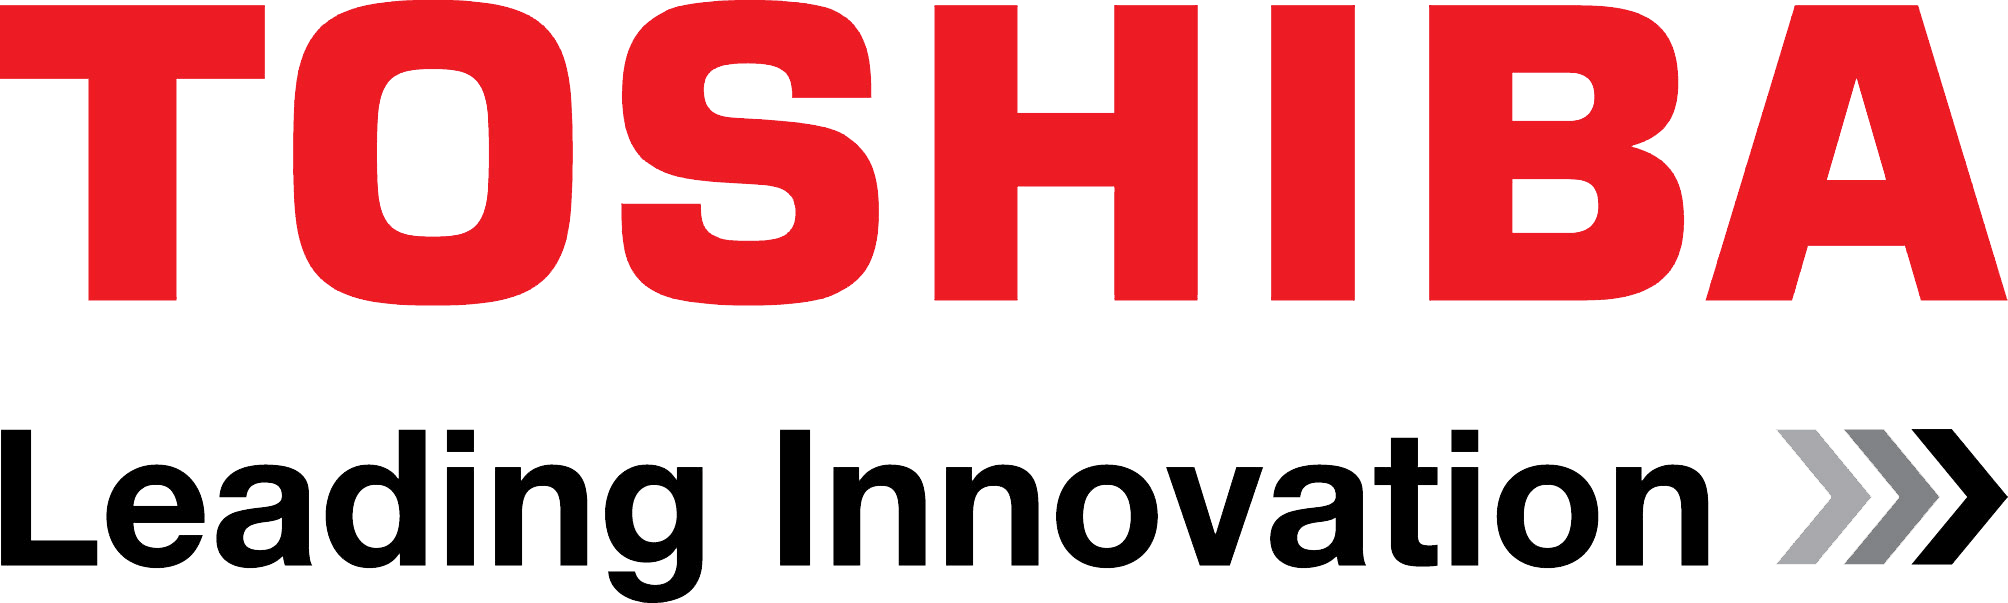 Toshiba - Leading innovation